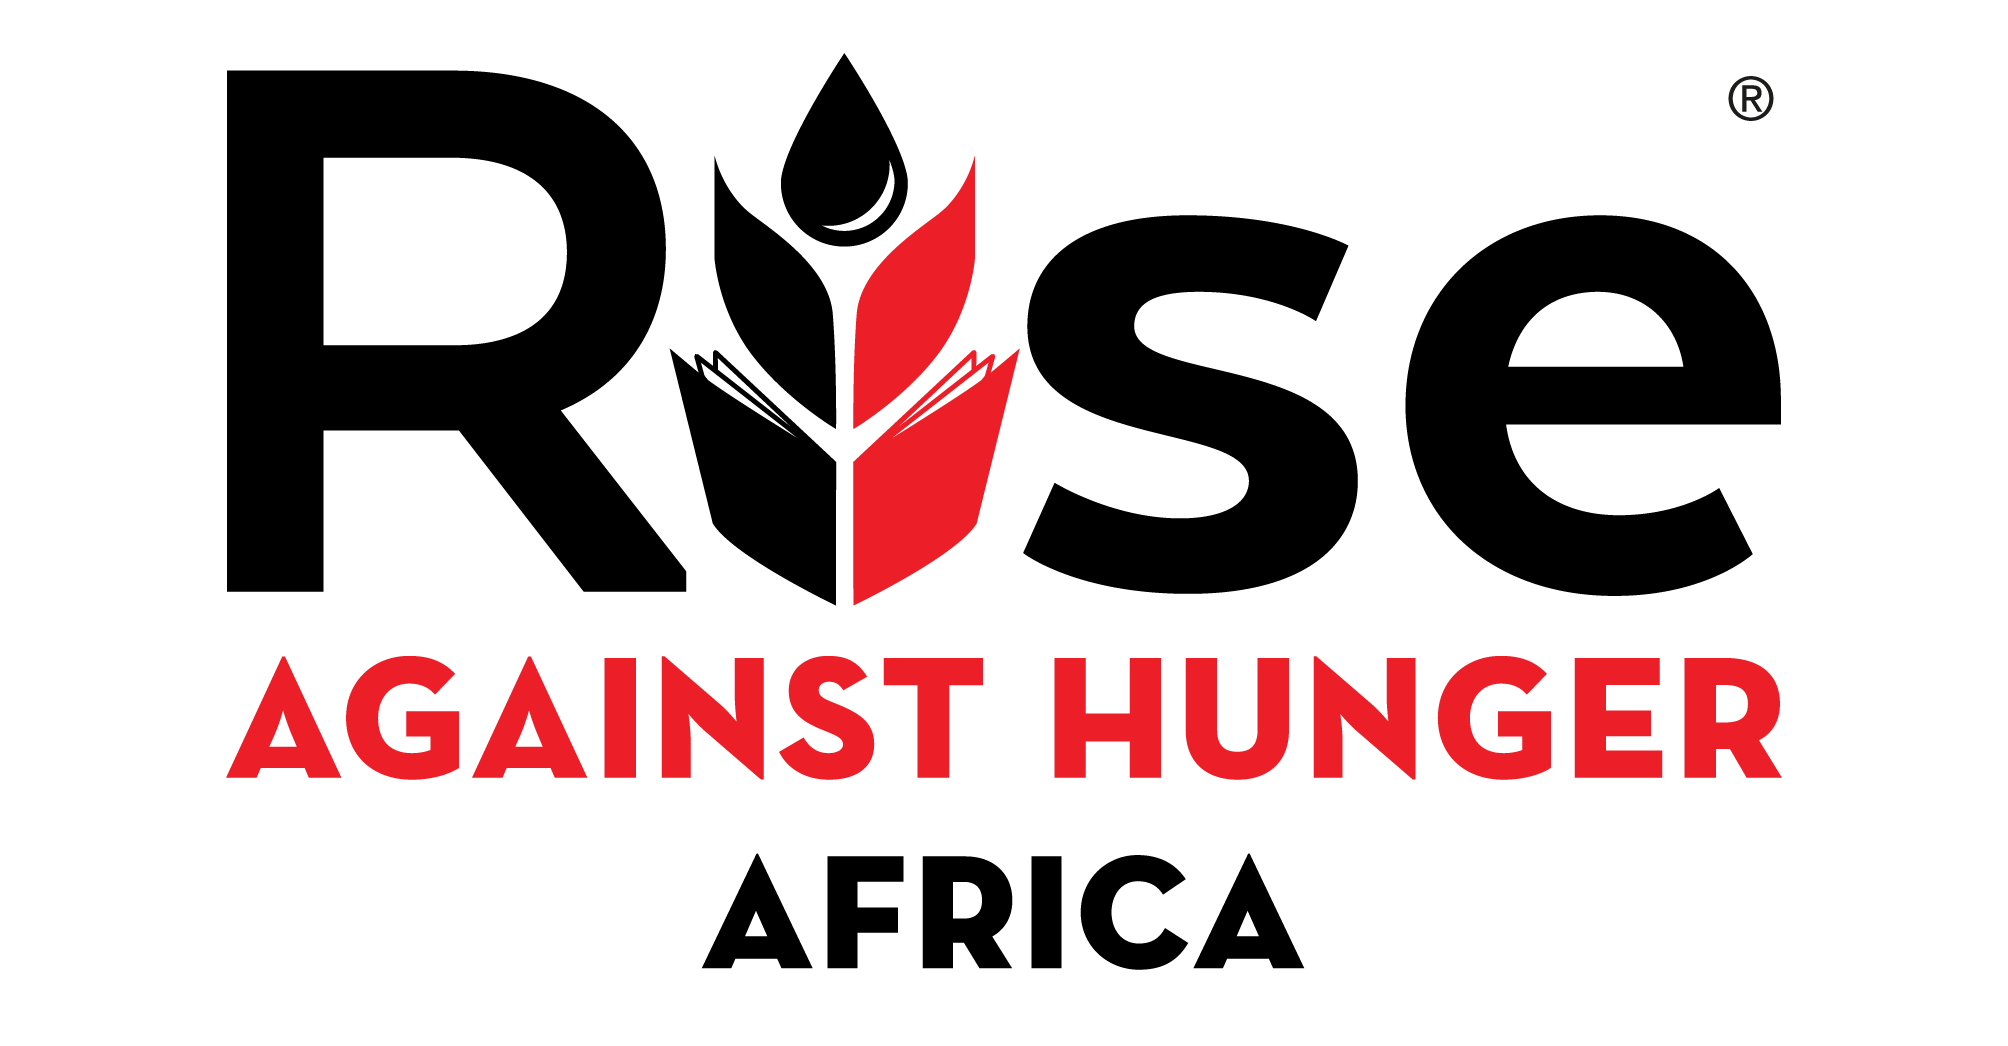 Rise Against Hunger Africa